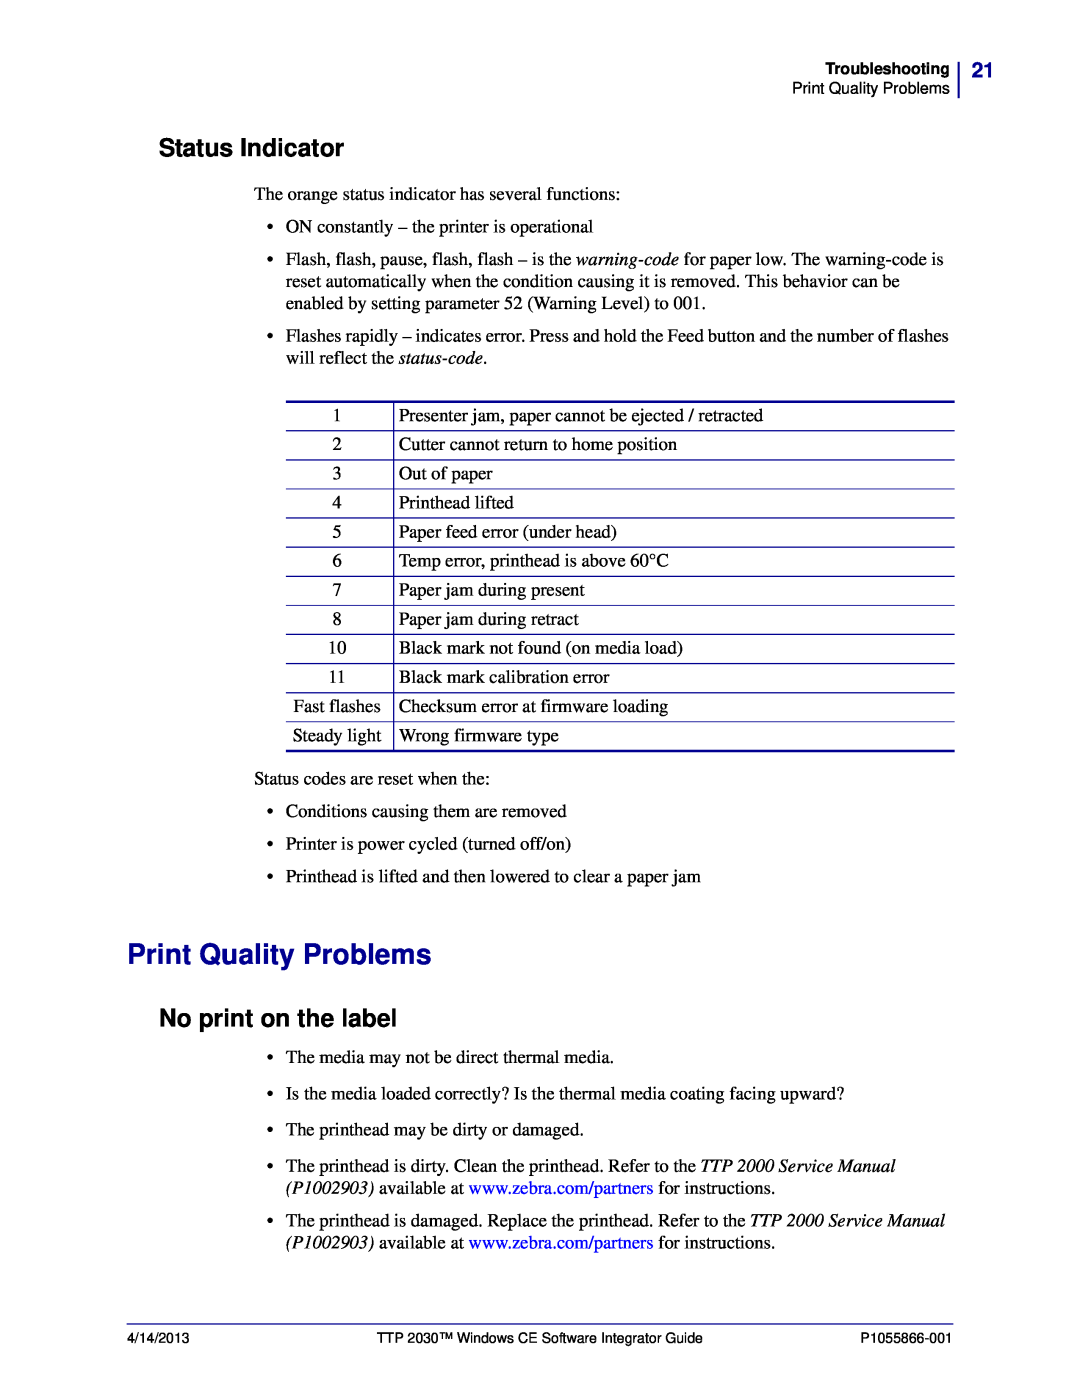 Zebra Technologies TTP 2030 manual Print Quality Problems, Status Indicator, No print on the label 